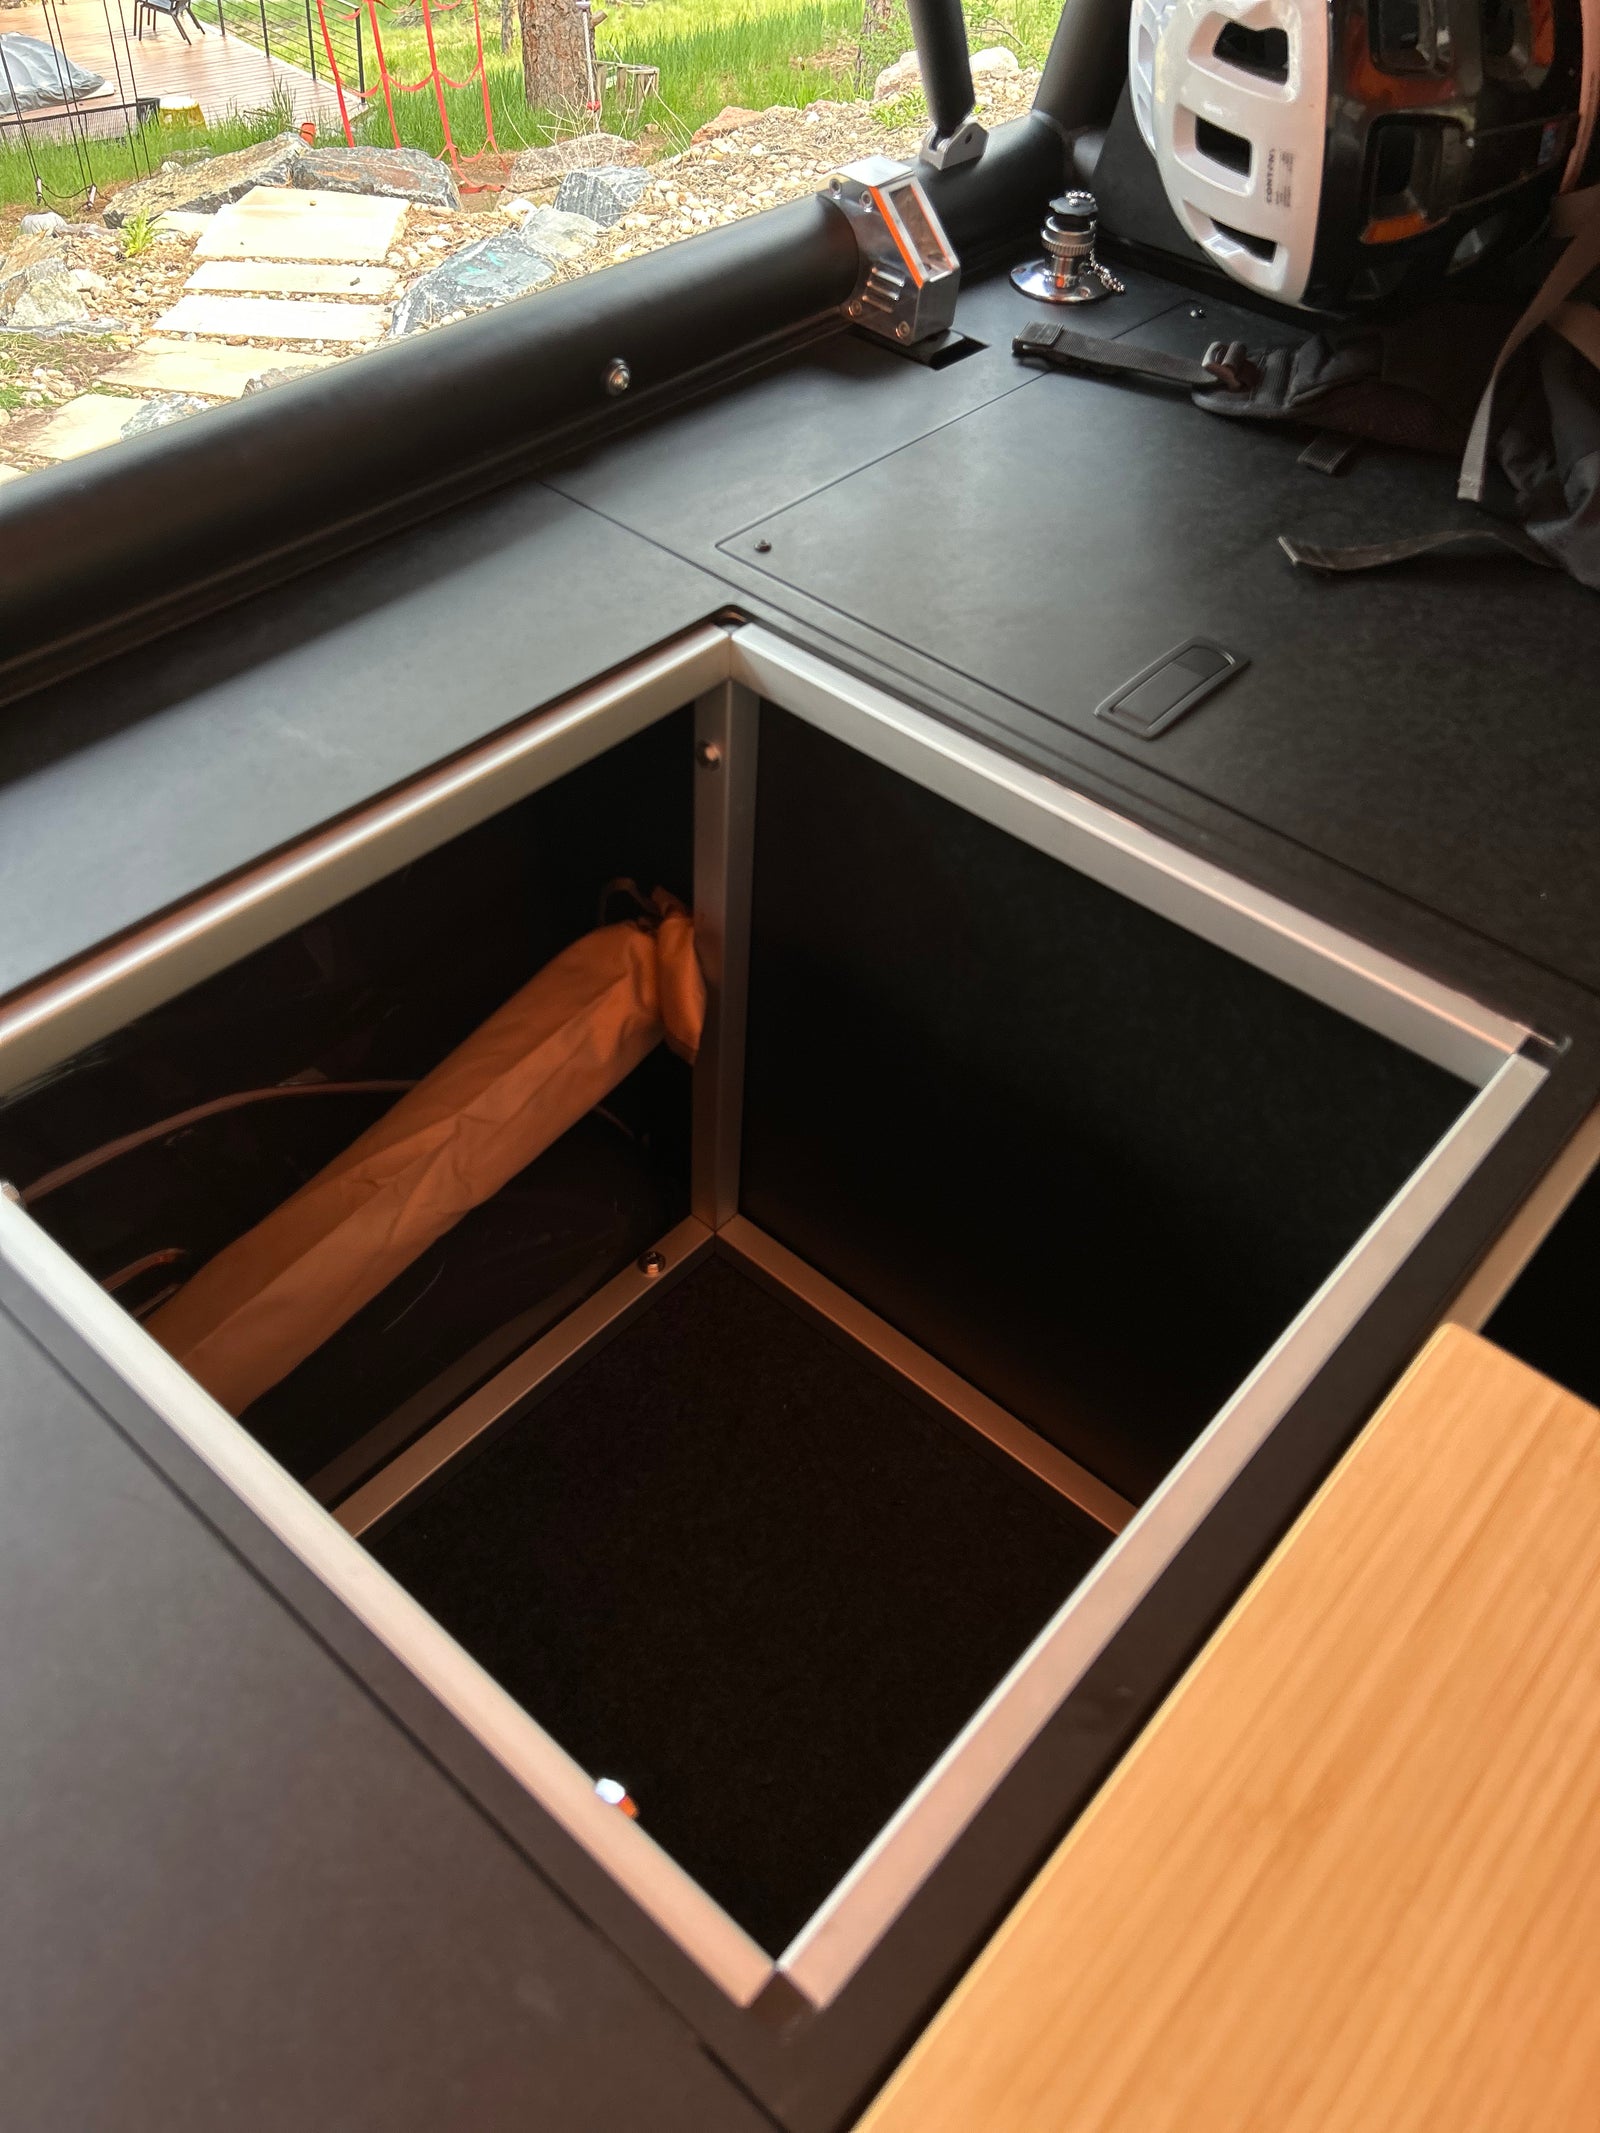 Go Fast Camper (GFC) build - Interior storage cabinet open, showing wheel arch overhang